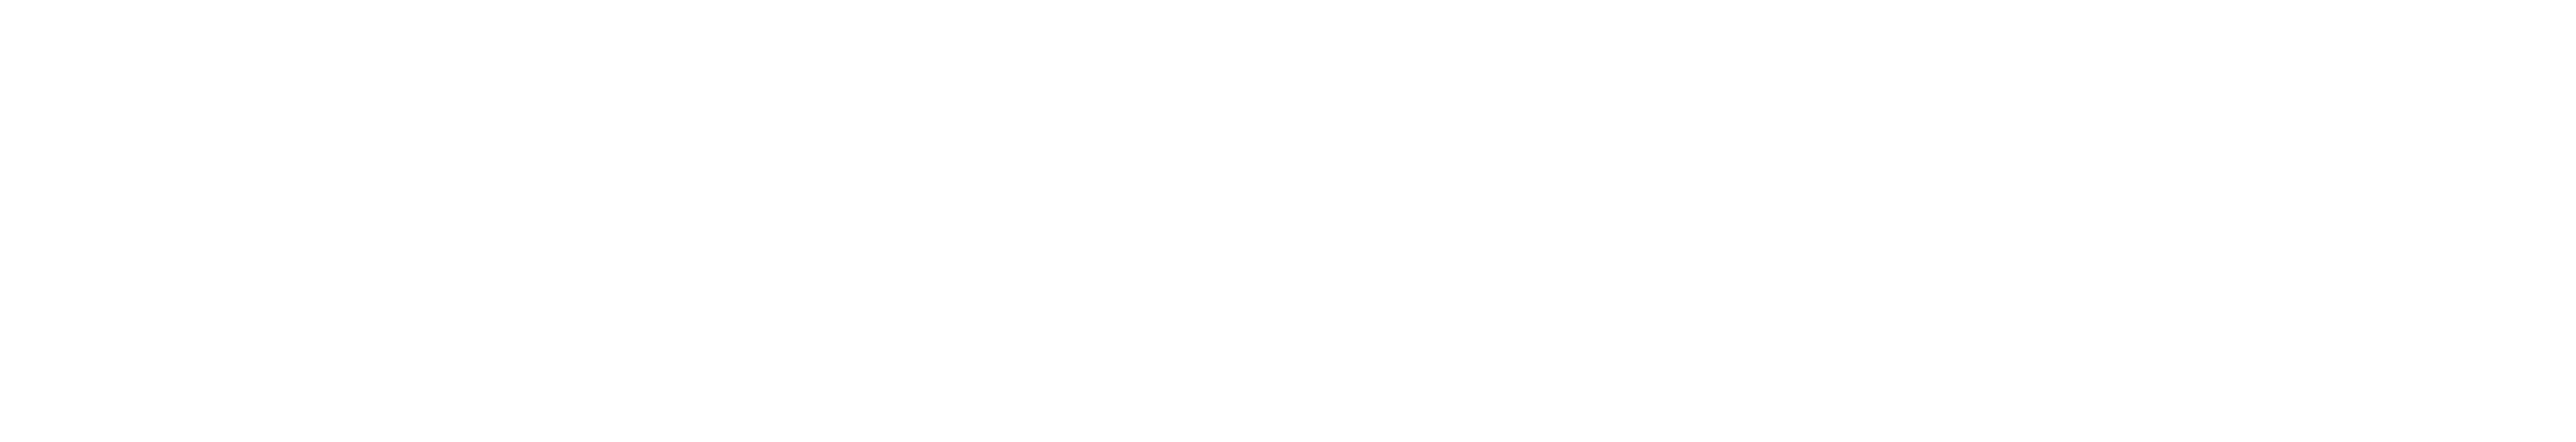 Warragul Community HouseOur Staff